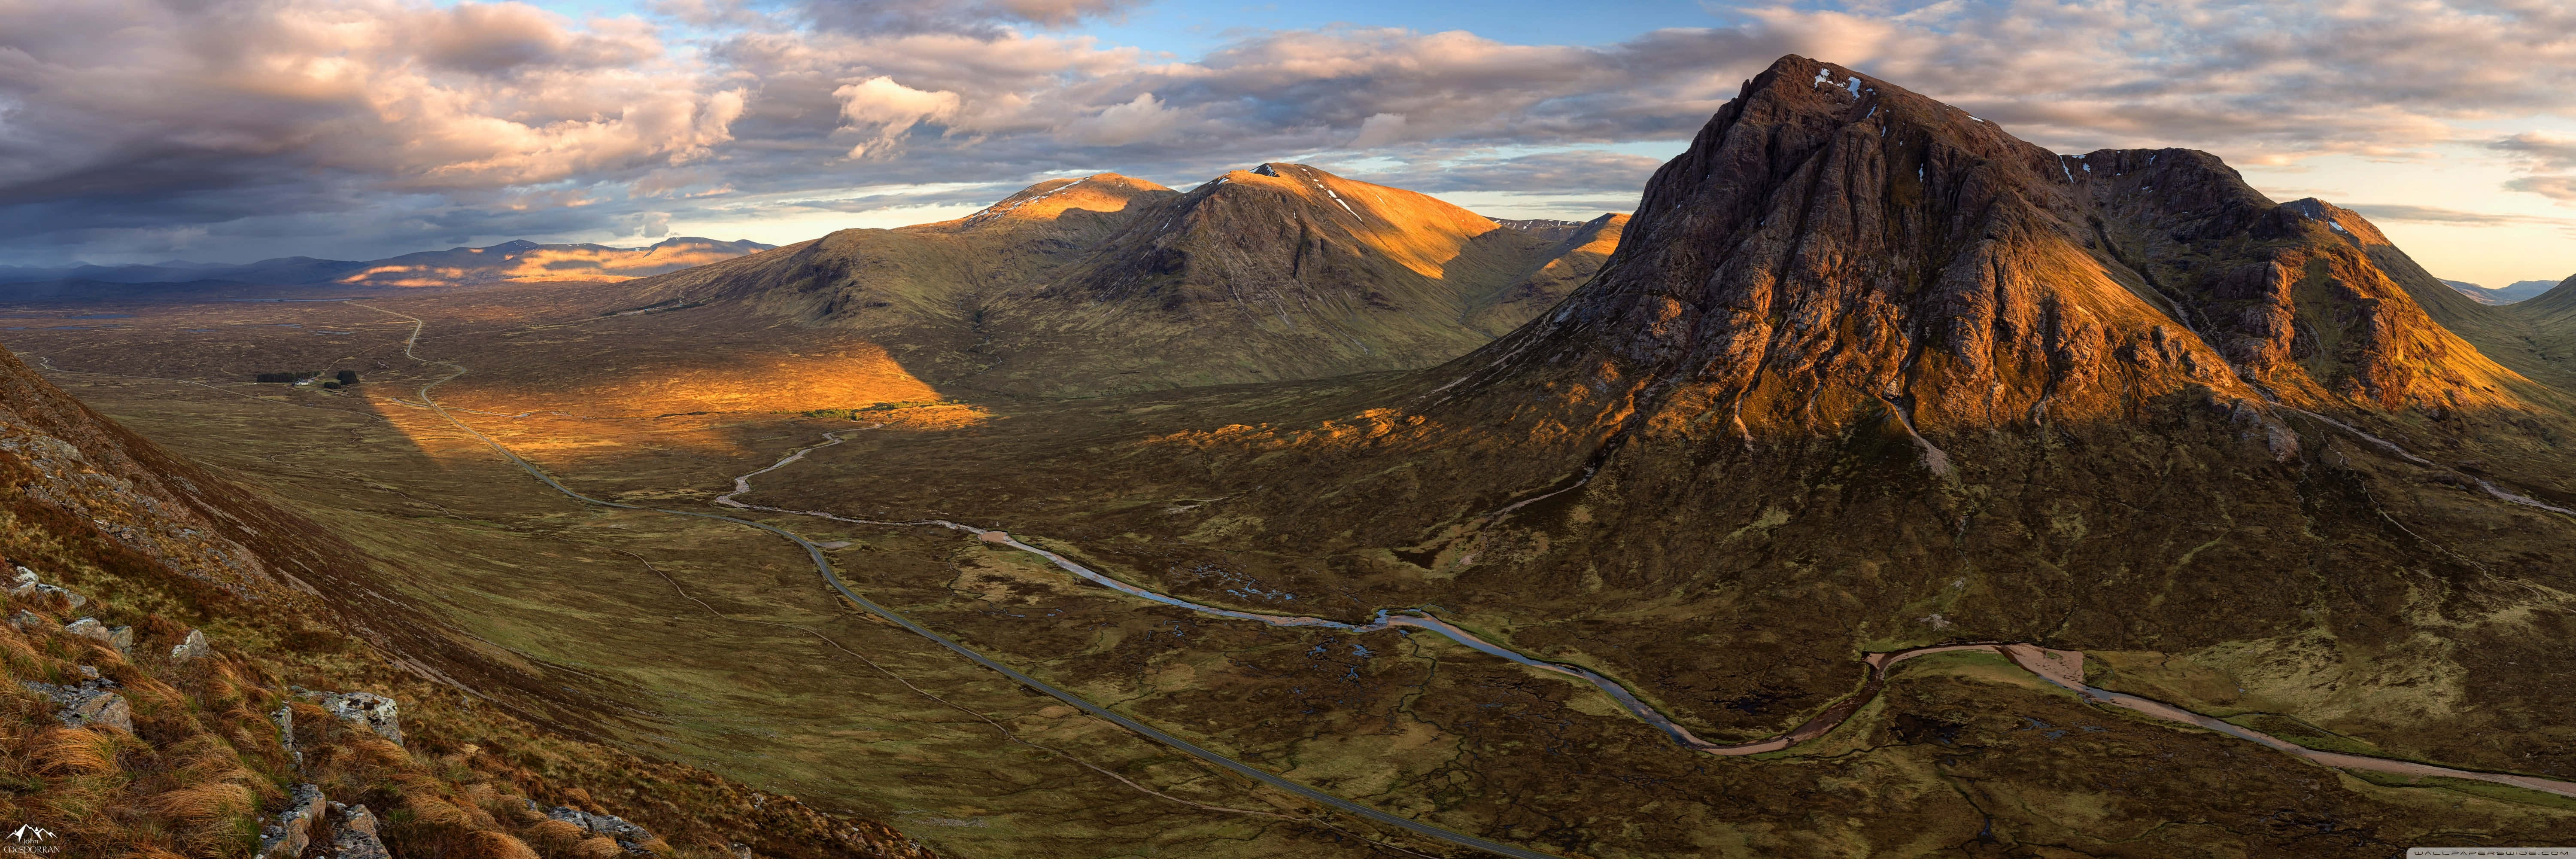 Scotland Mountain Range As A Panoramic Desktop